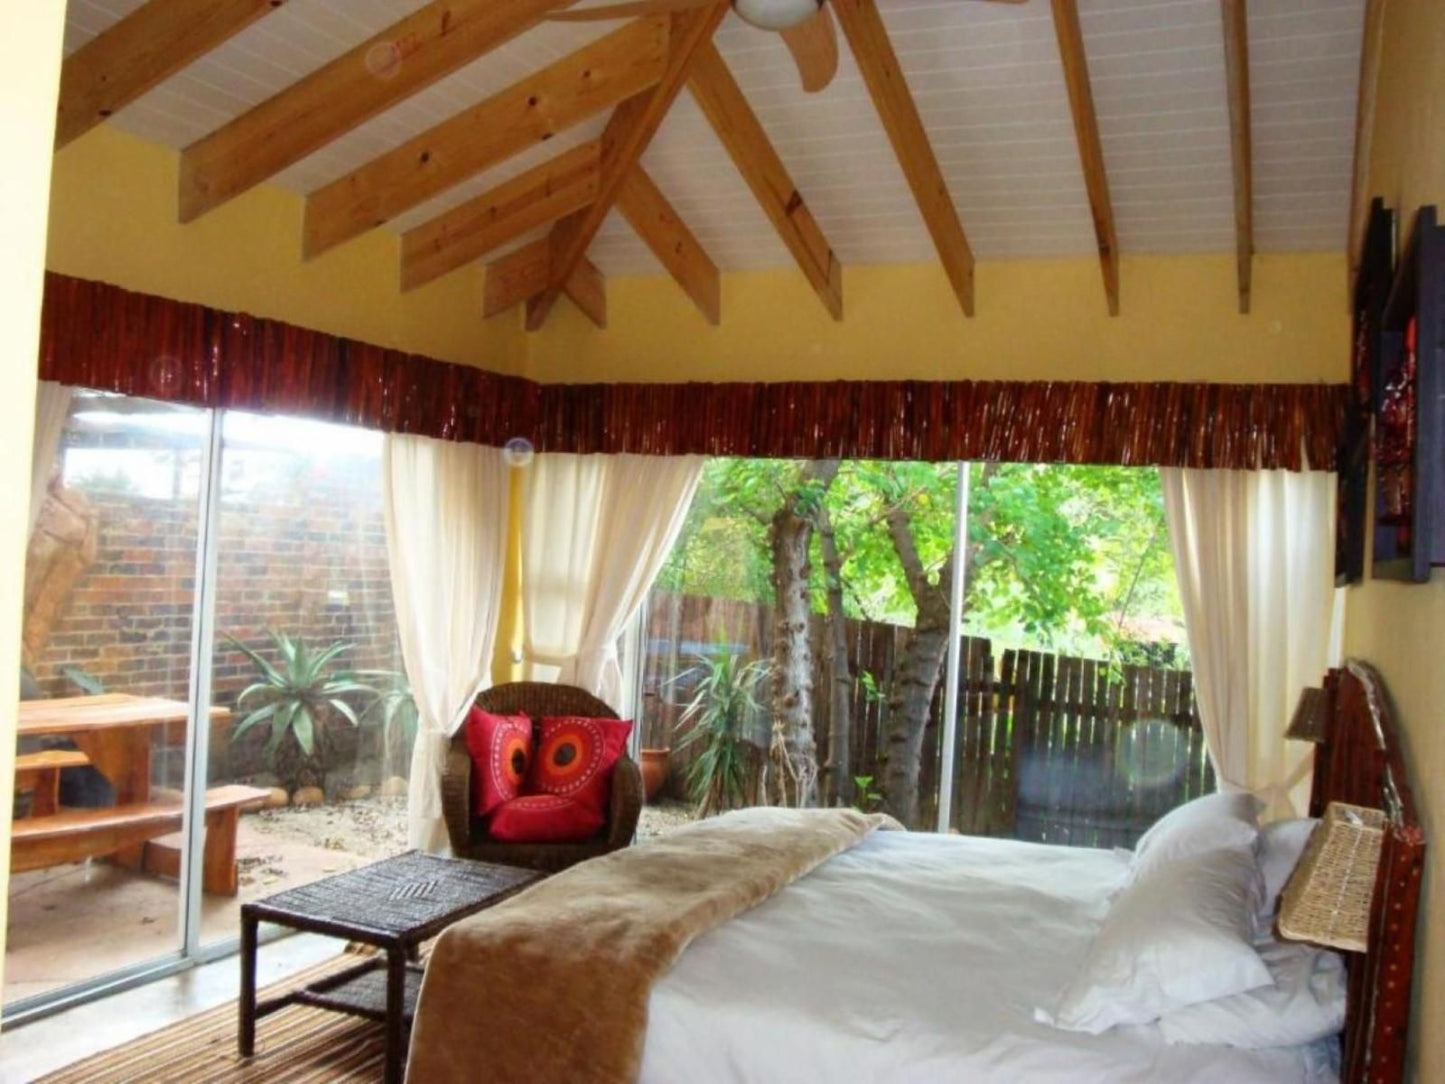 Flintstones Guest House Fourways Fourways Johannesburg Gauteng South Africa Bedroom